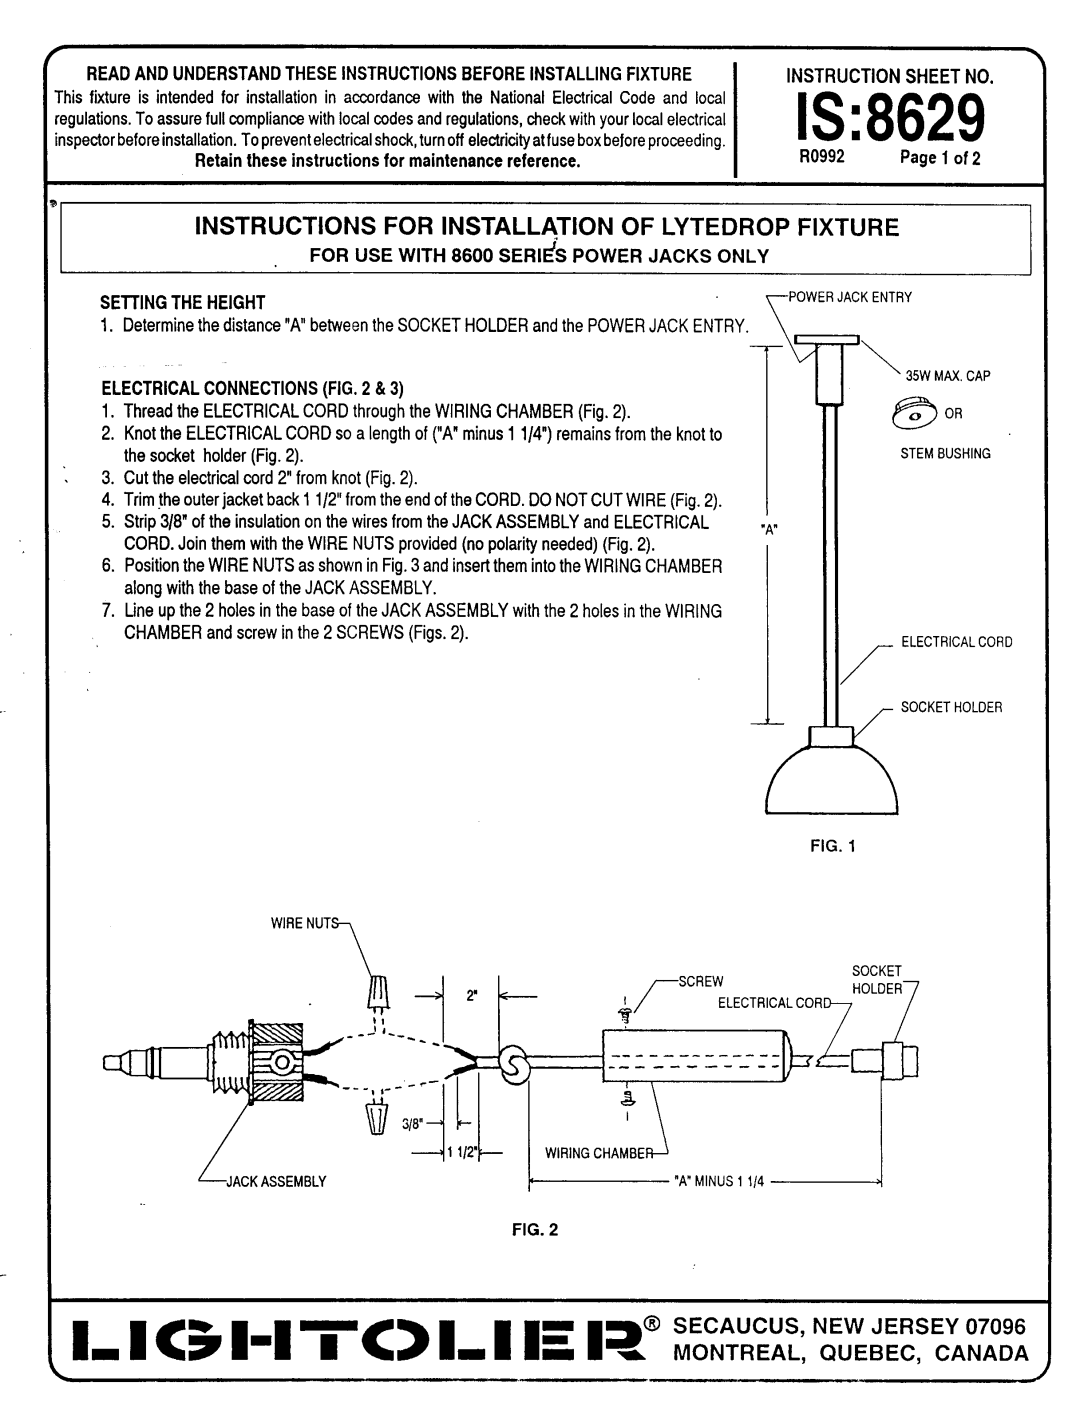 Lightolier 8629 instruction sheet Is, Instructions For Installation Of Lytedrop Fixture 